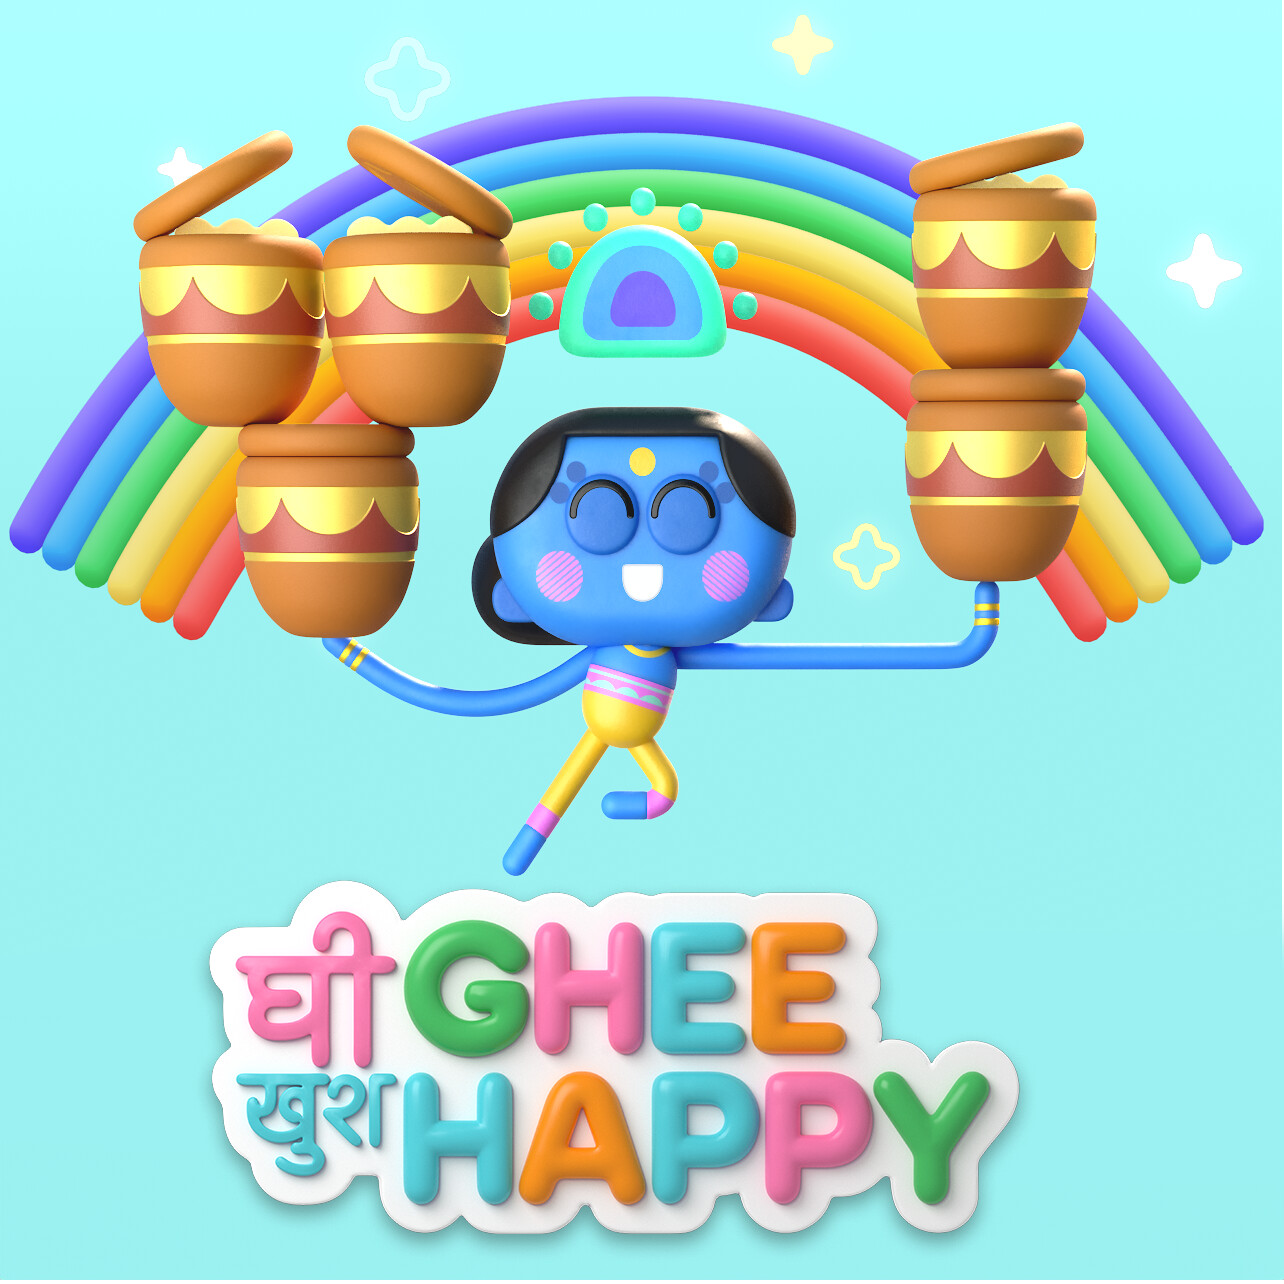 Ghee Happy - Materials